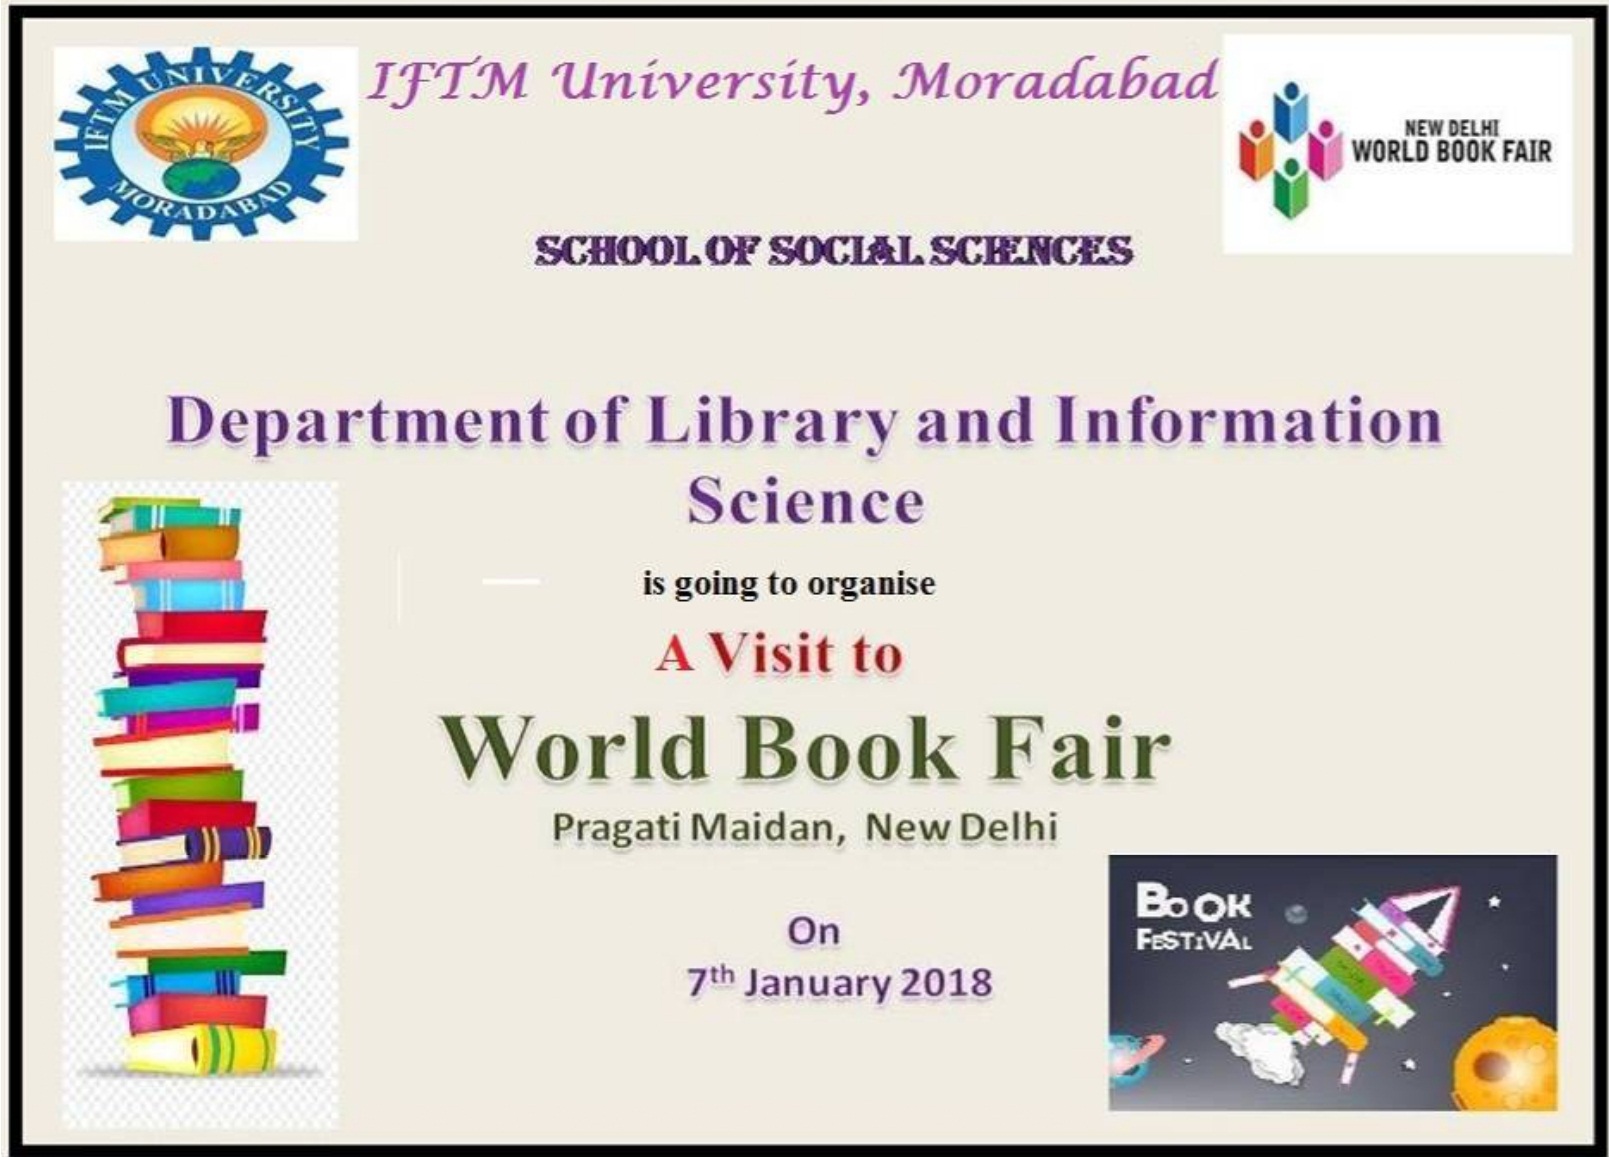 World Book Fair, Pragati Maidan, New Delhi